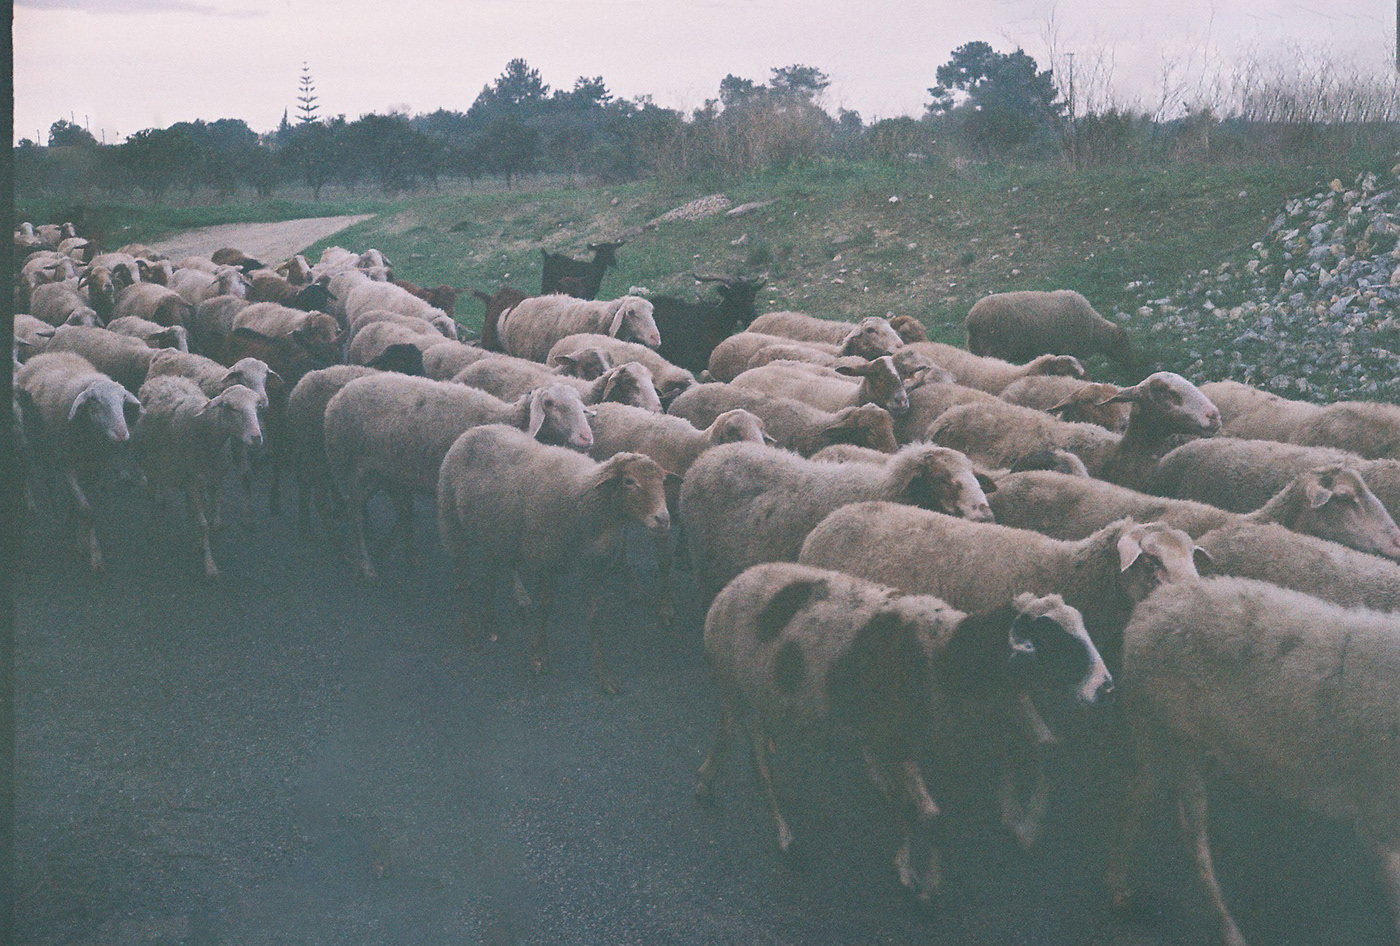 35mm 35mm film 35mm Photography analog photography film photography Fujicolor C200 grain sheeps sunset yashica electro 35